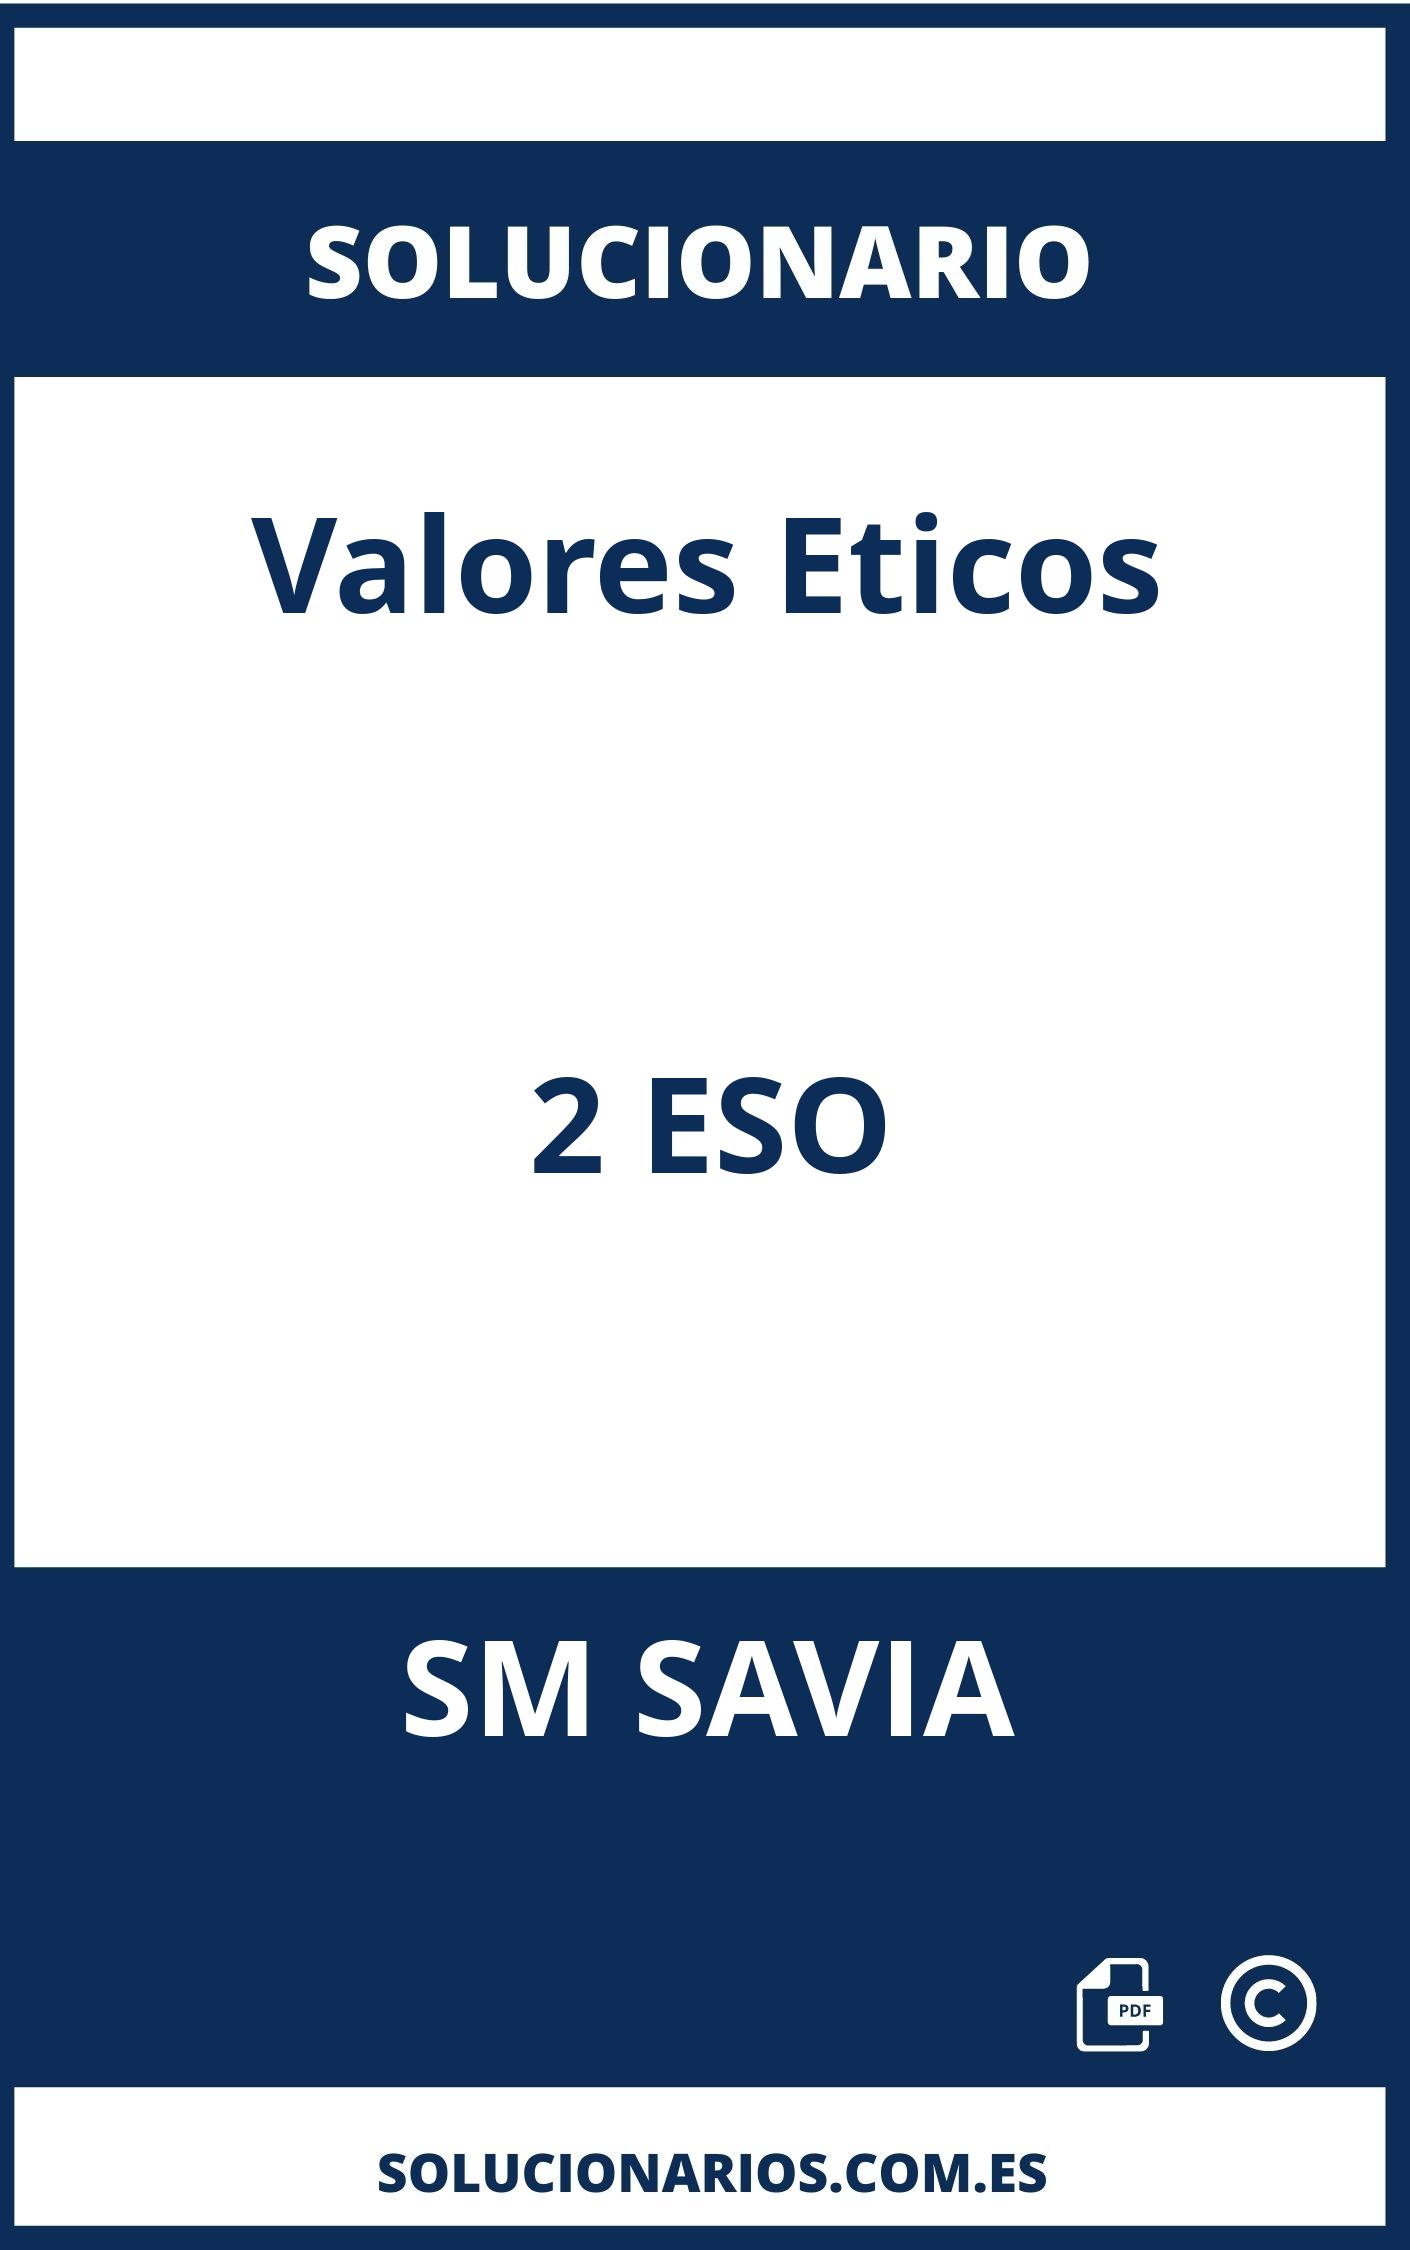 Solucionario Valores Eticos 2 ESO SM SAVIA